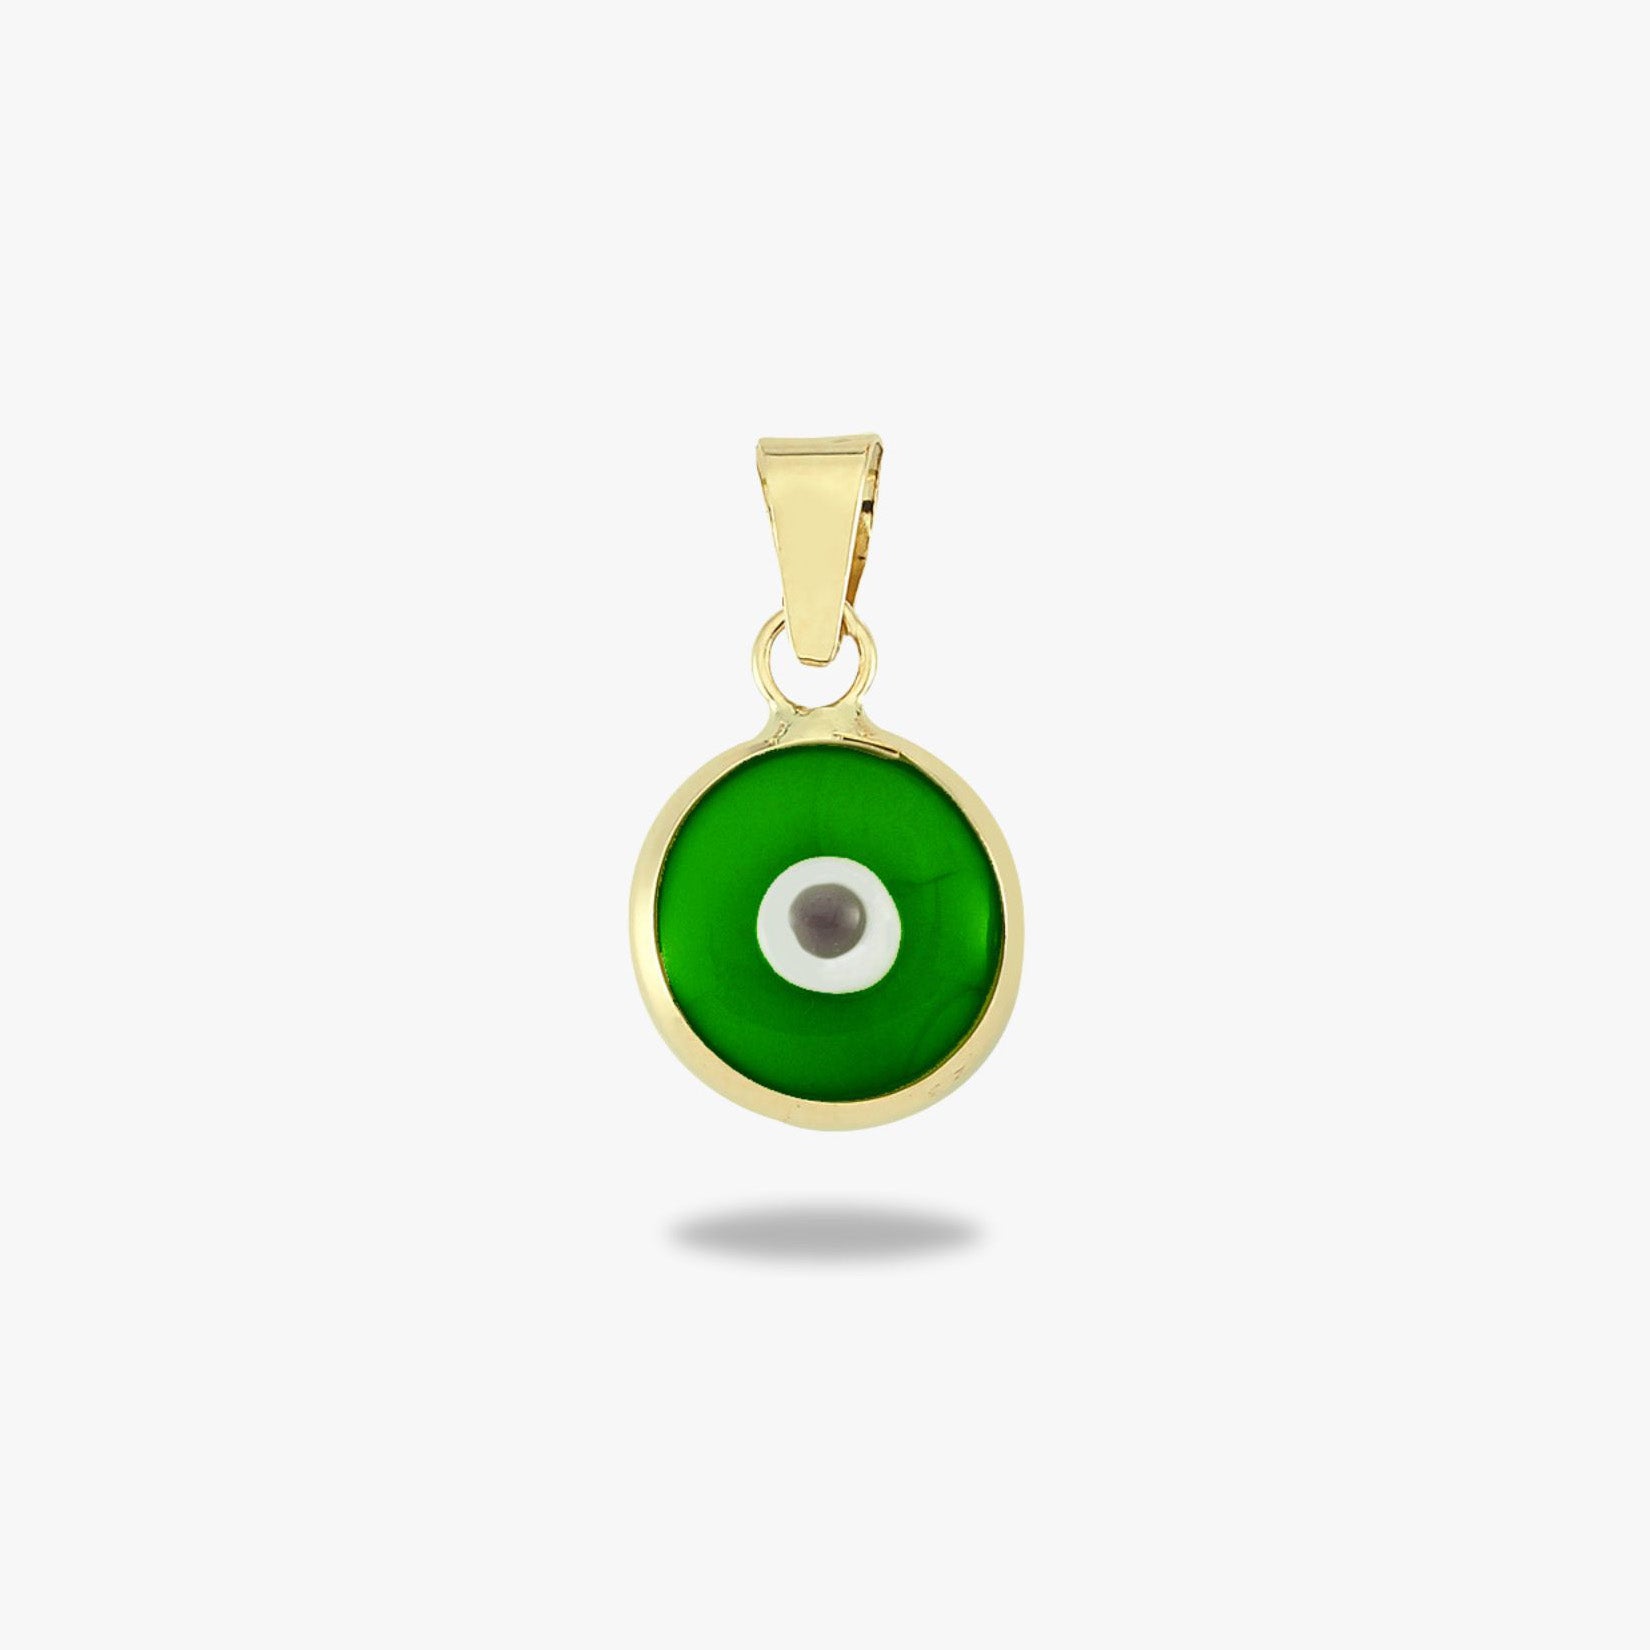 Green Evil Eye Pendant Necklace in 14K Gold